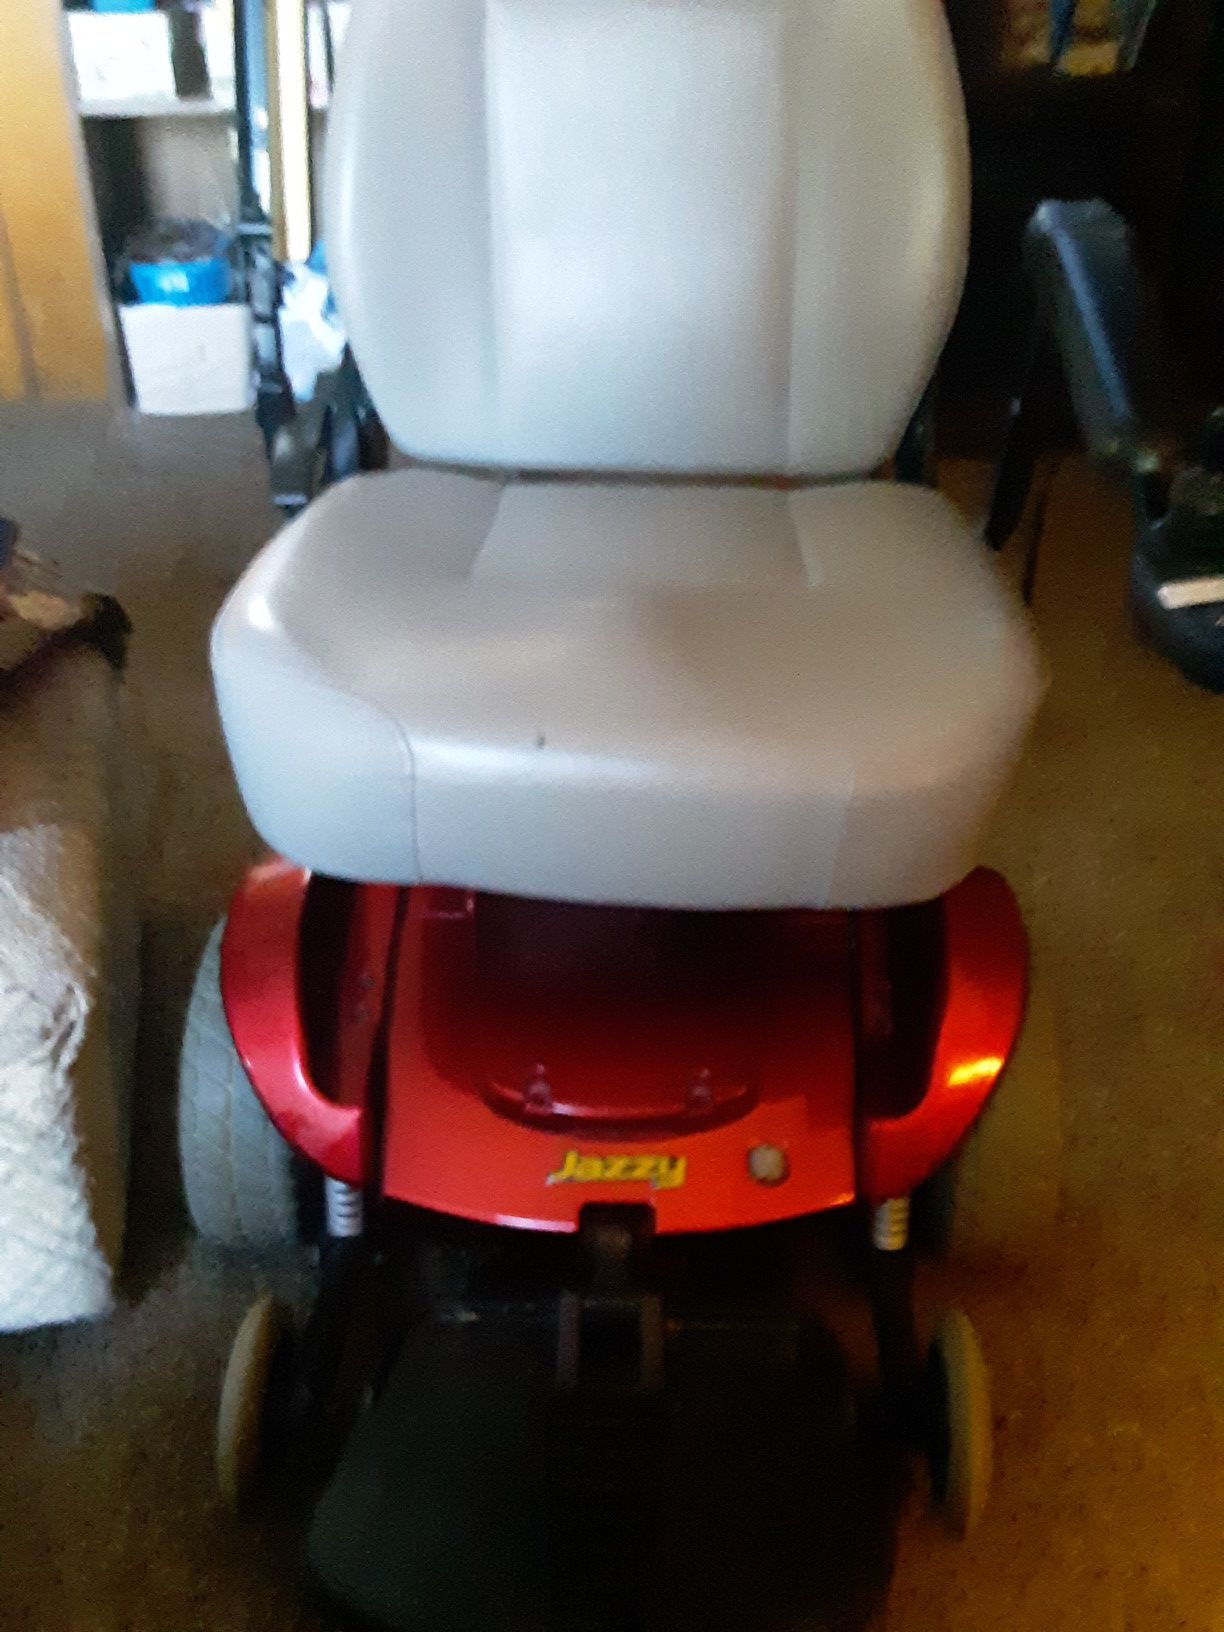 Jazzy motor wheelchair